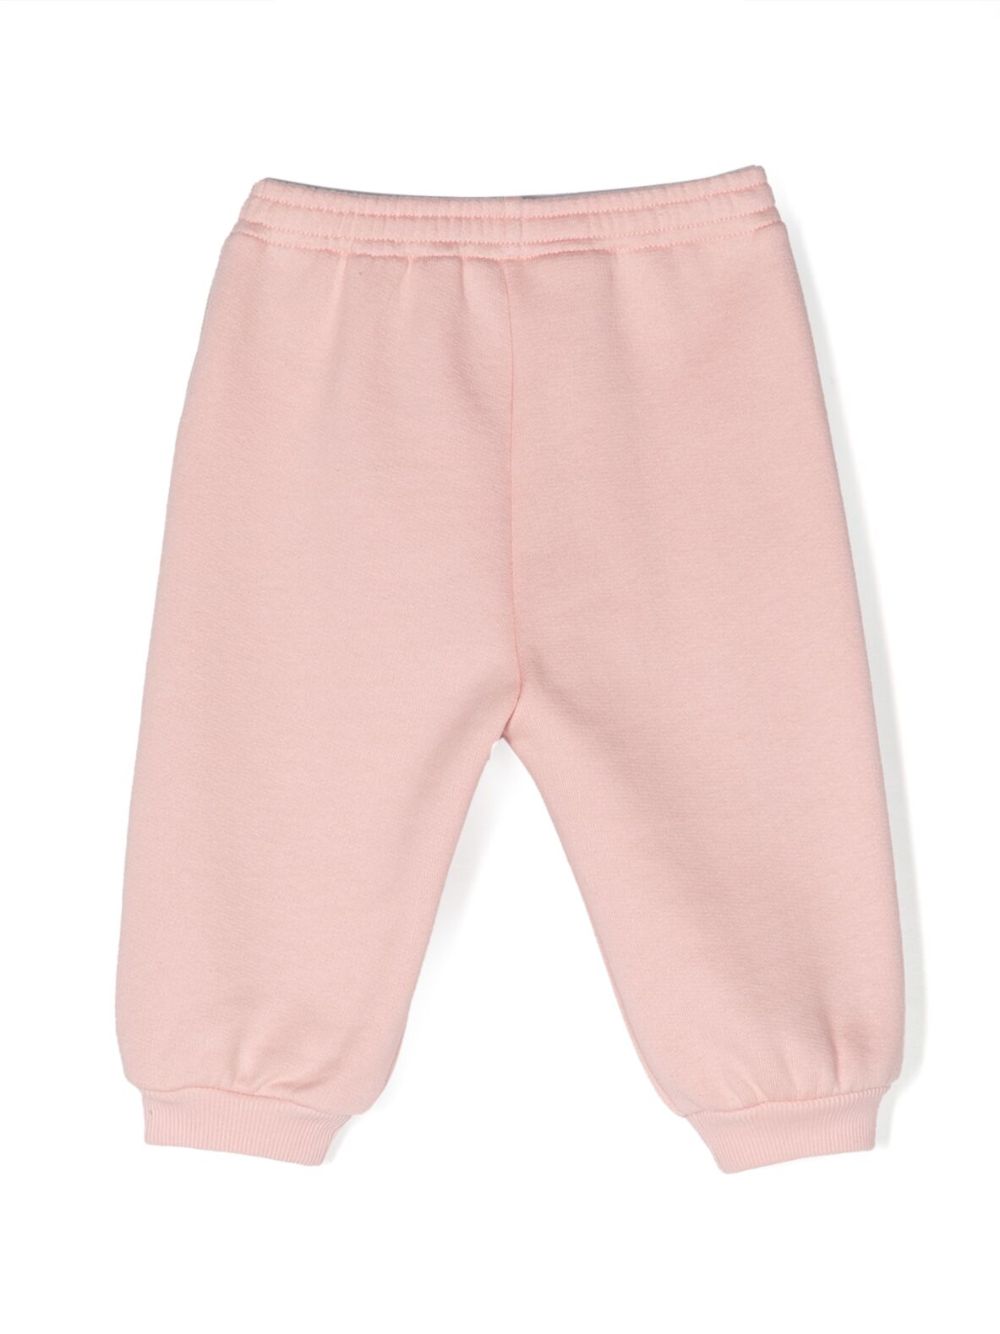 Pantaloni rosa neonato unisex